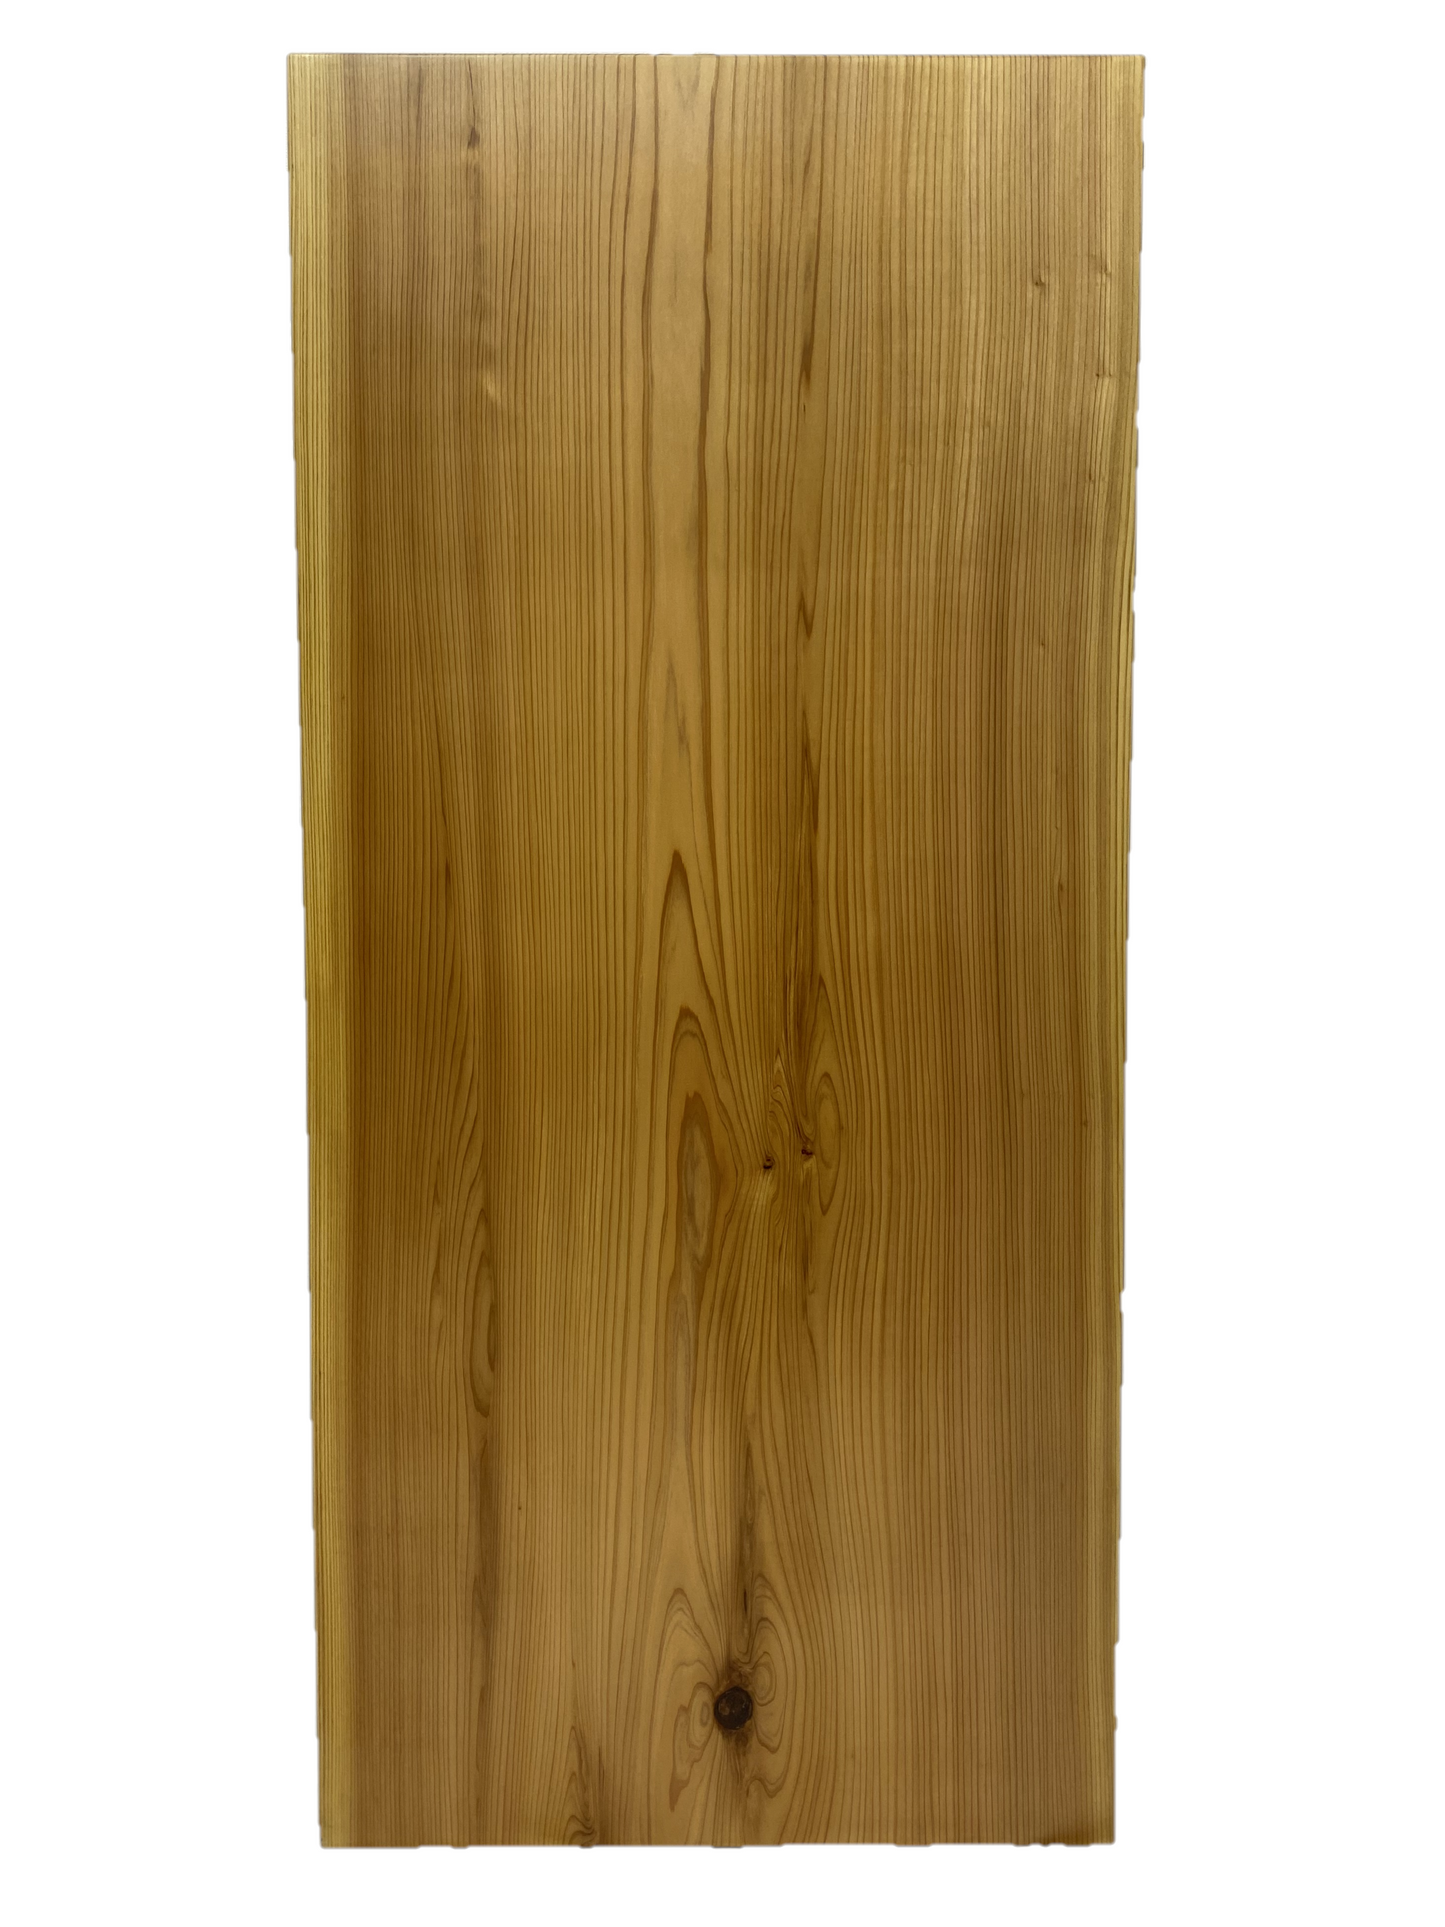 A0012 高知産杉無垢一枚板 テーブル天板 1,650mm×760mm×60mm